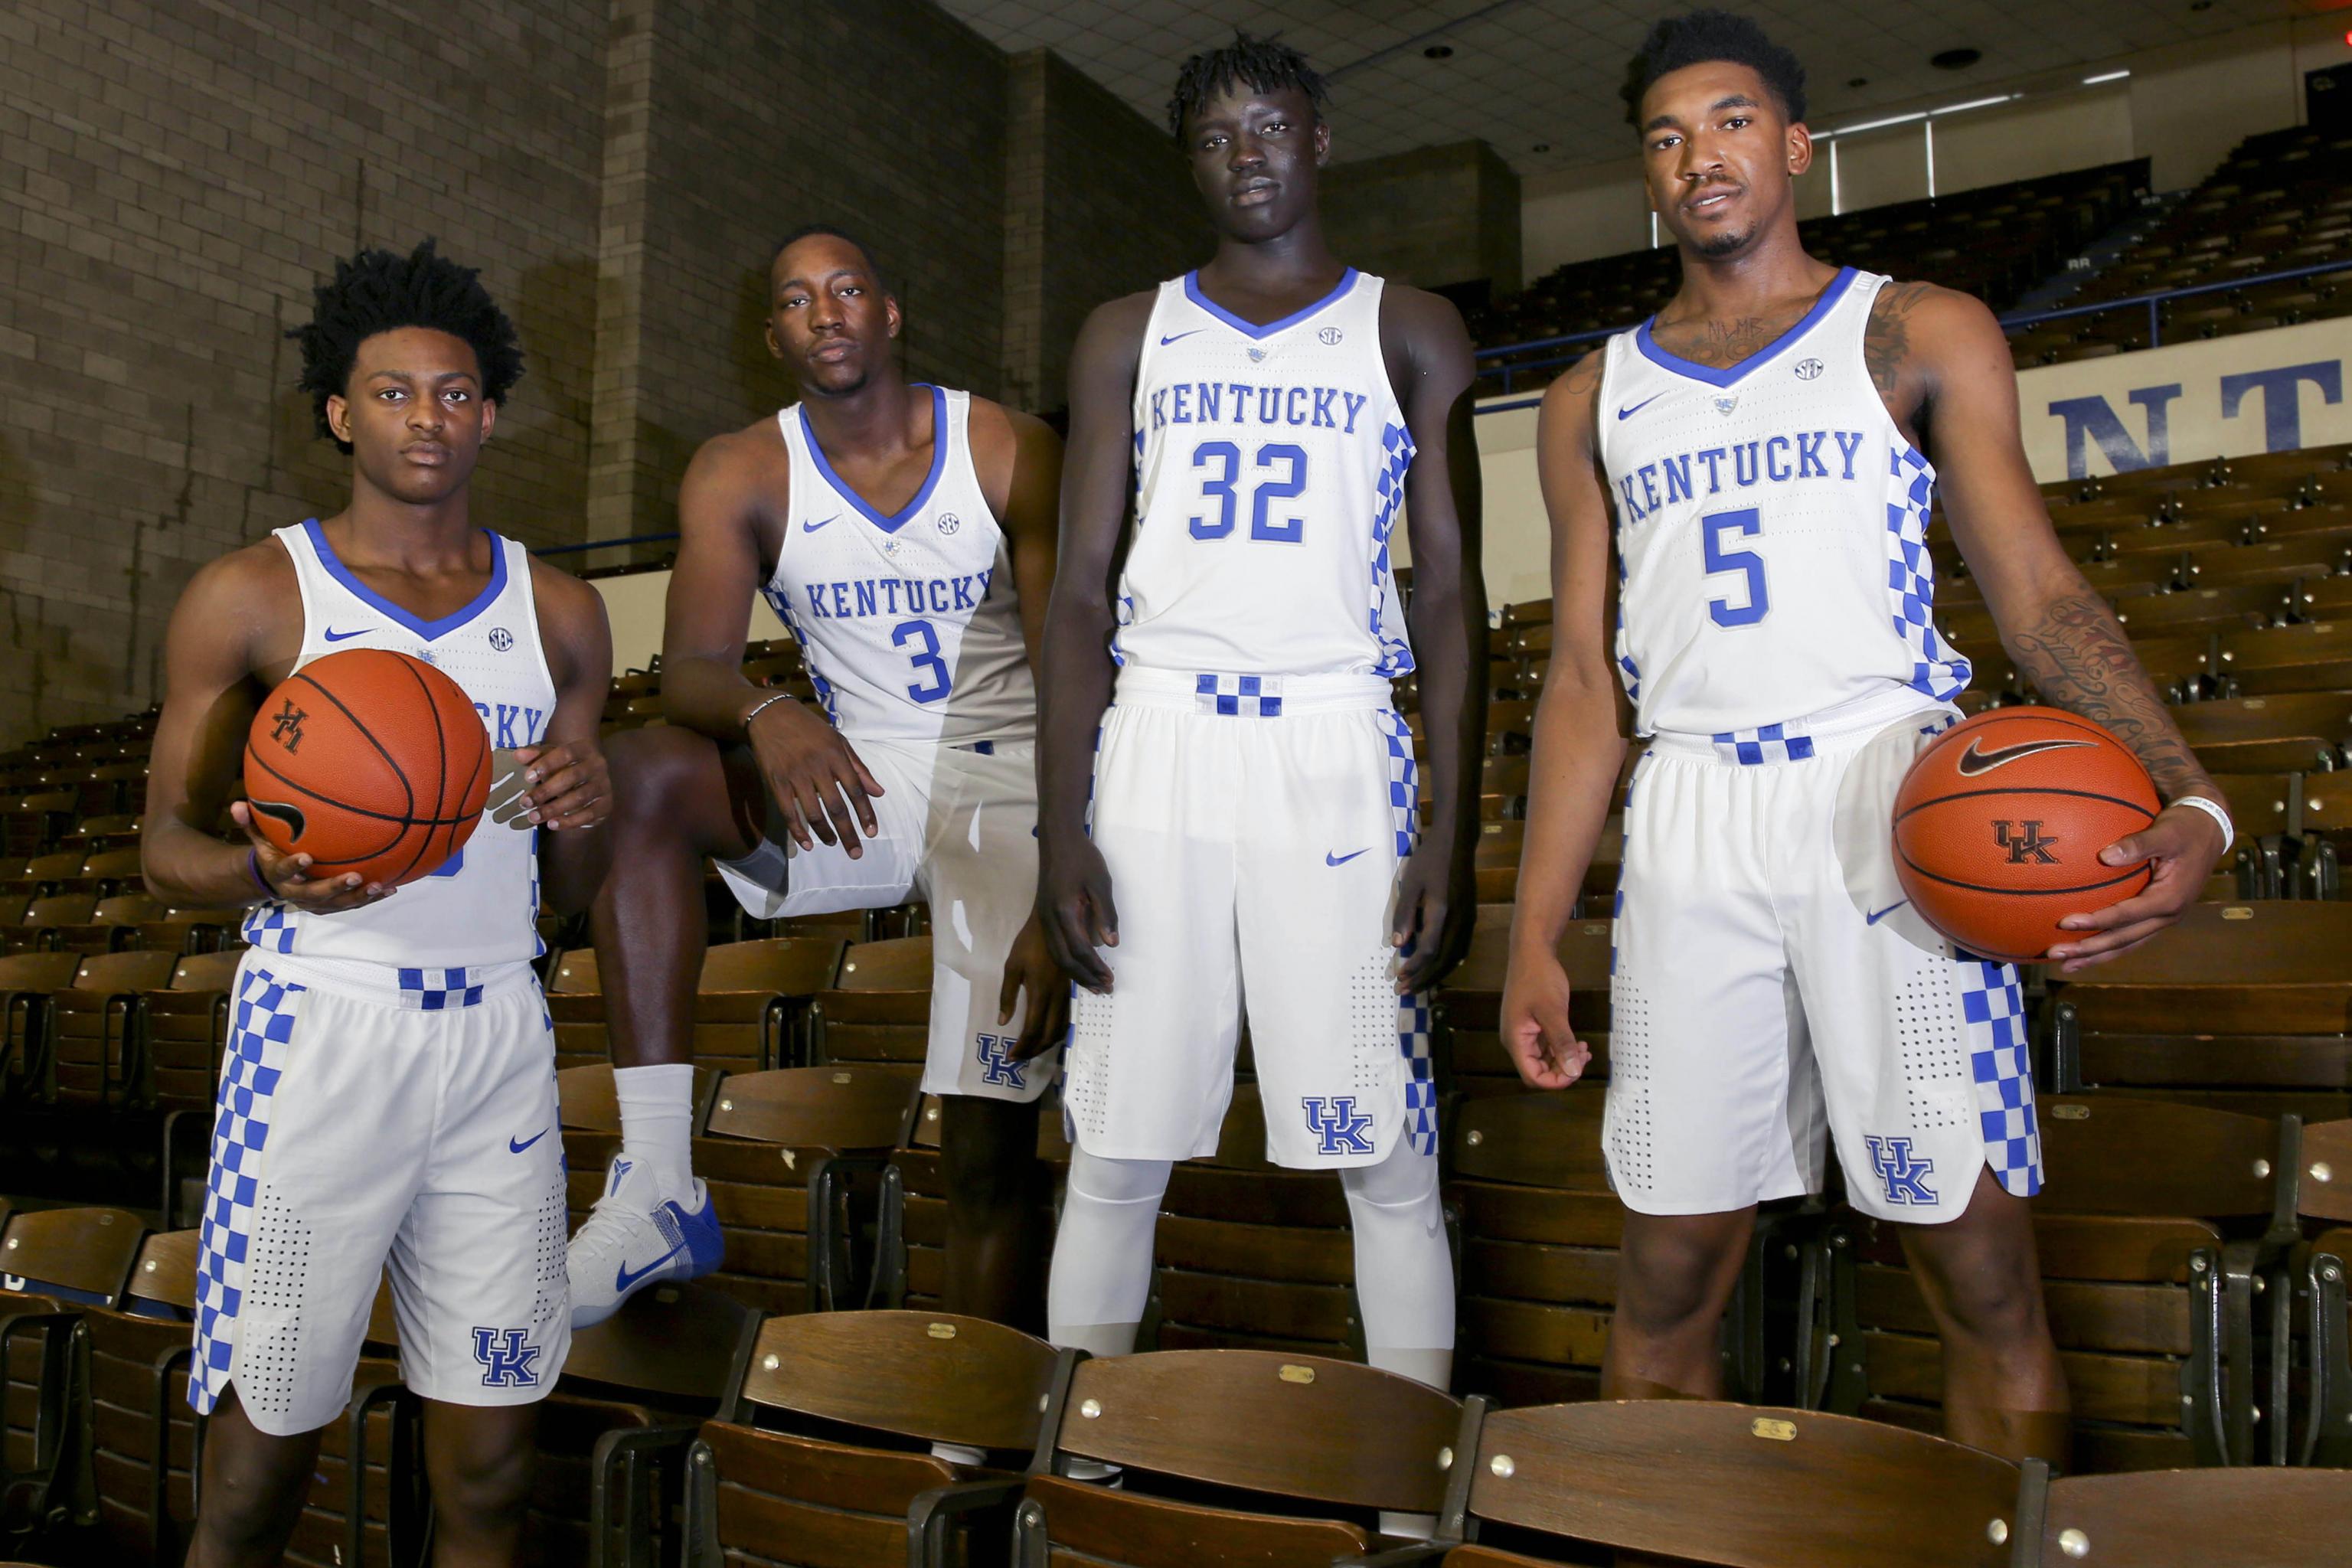 Kentucky's Freshmen-Led Superteam Welcomes Fab 5 Comparisons